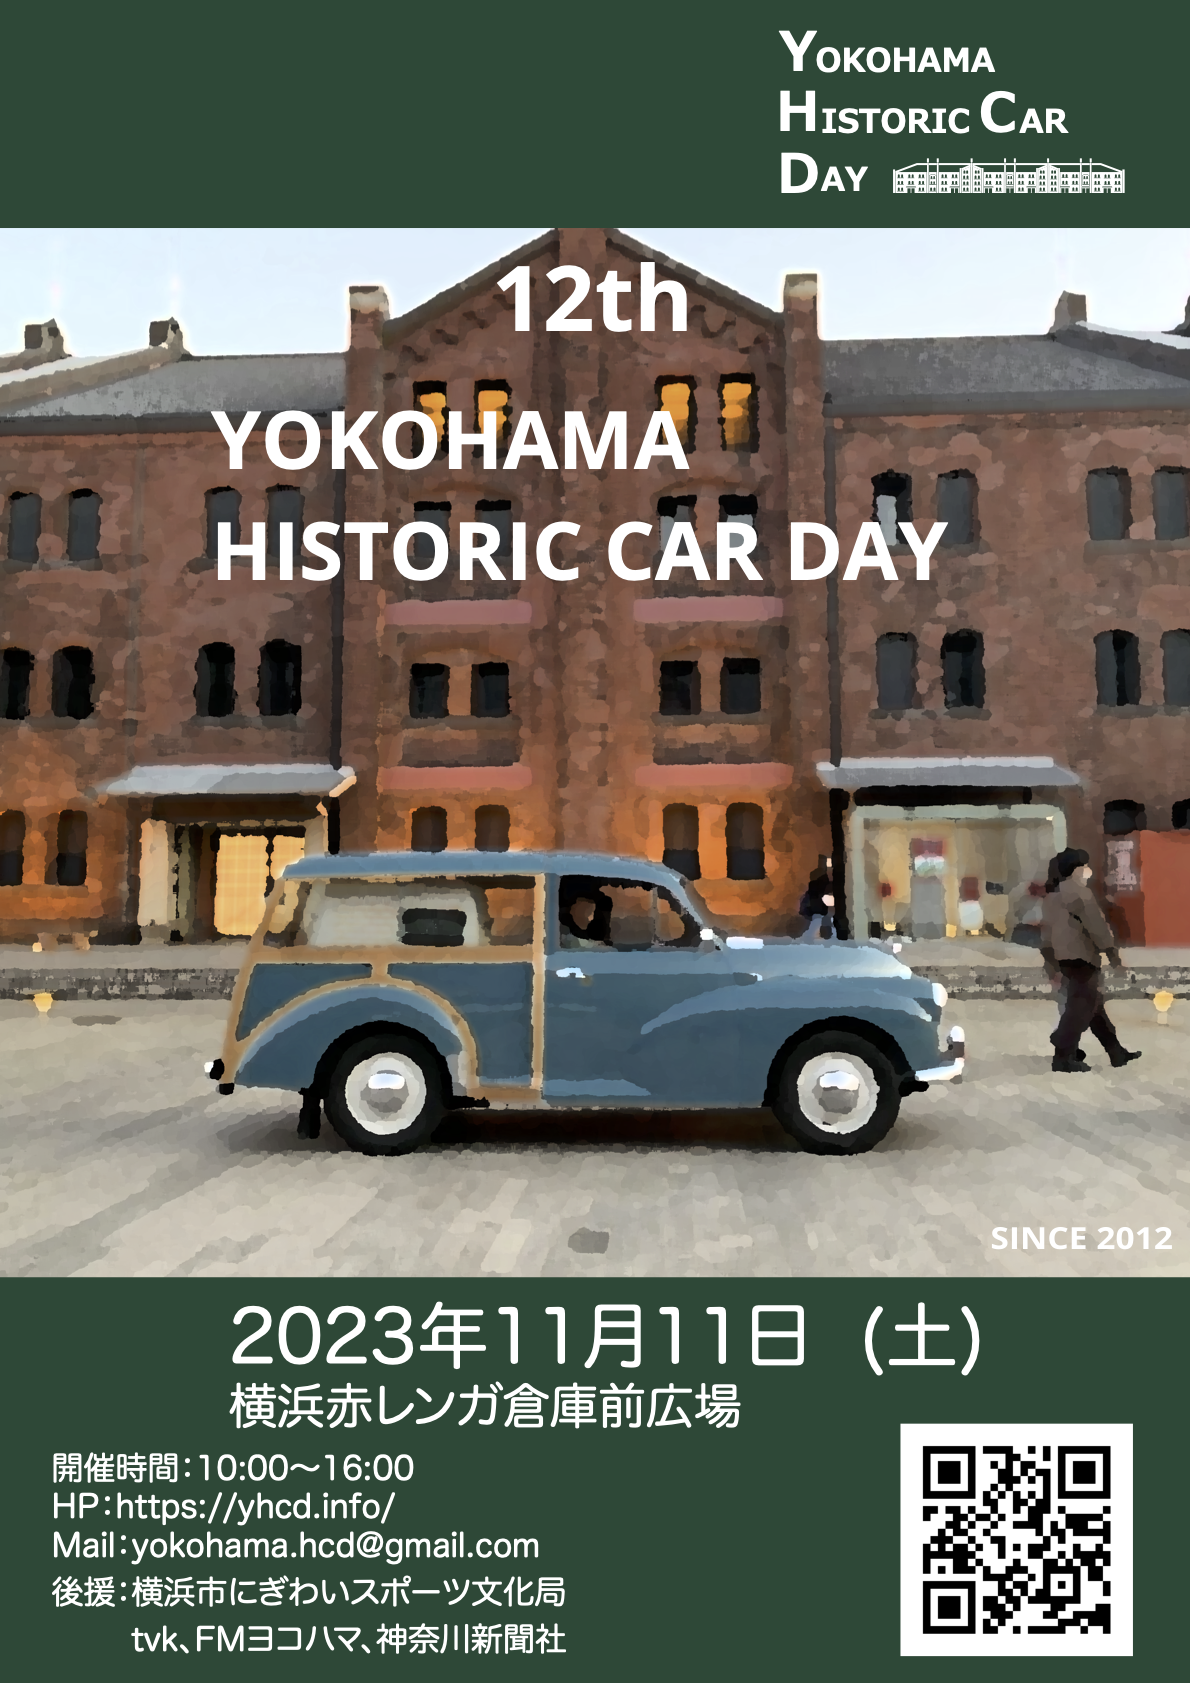 YOKOHAMA HISTORIC CAR DAY 12th